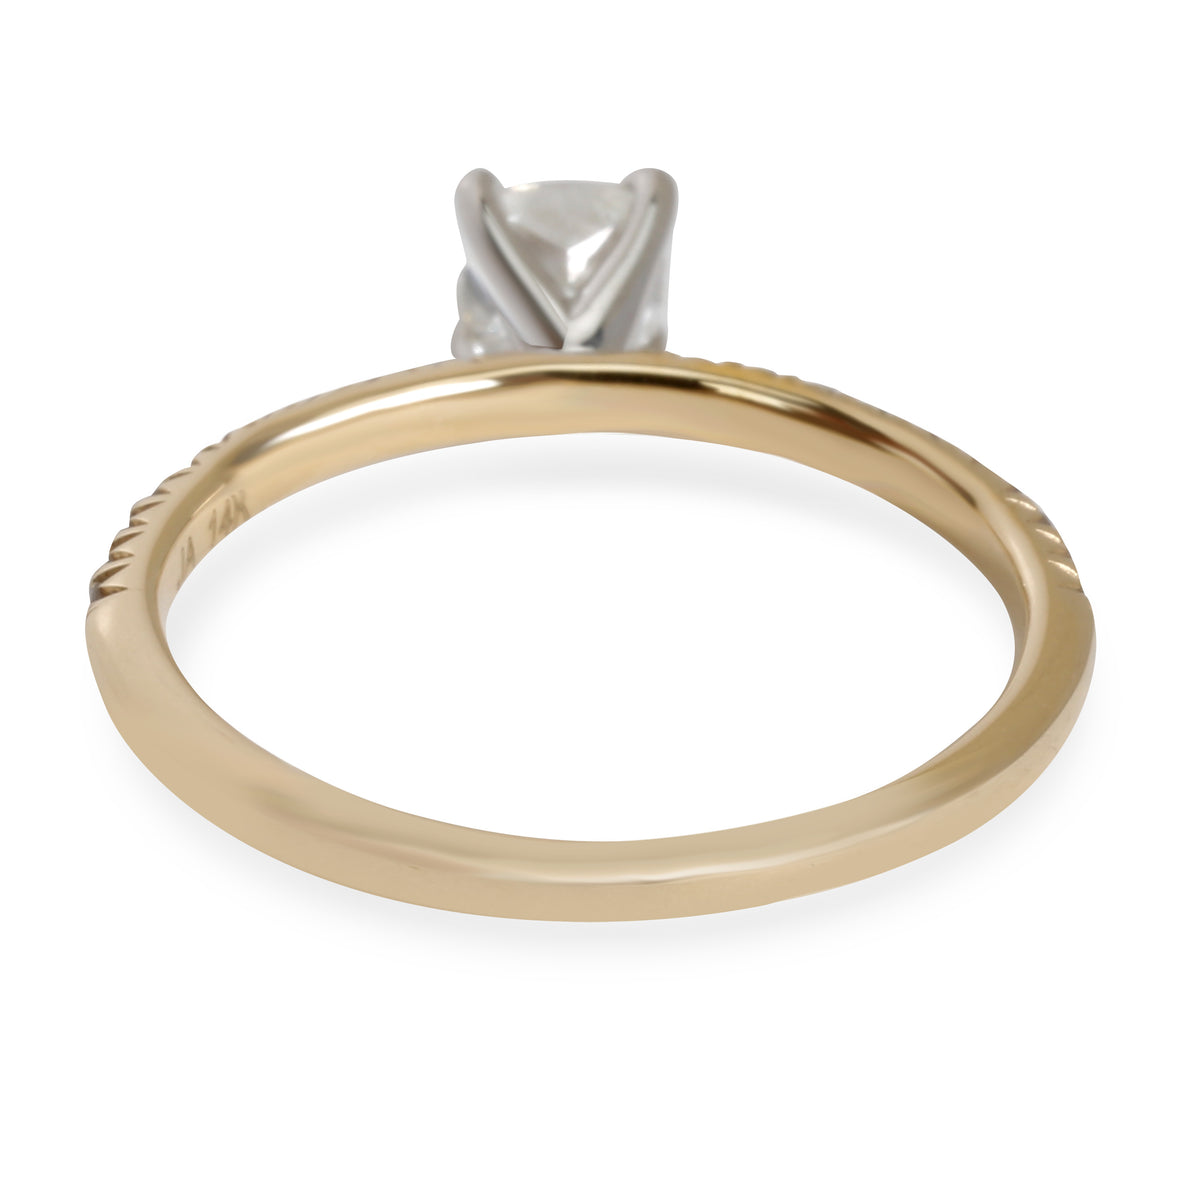 James Allen Diamond Engagement Ring in 14KT Gold G VVS1 0.64 CTW